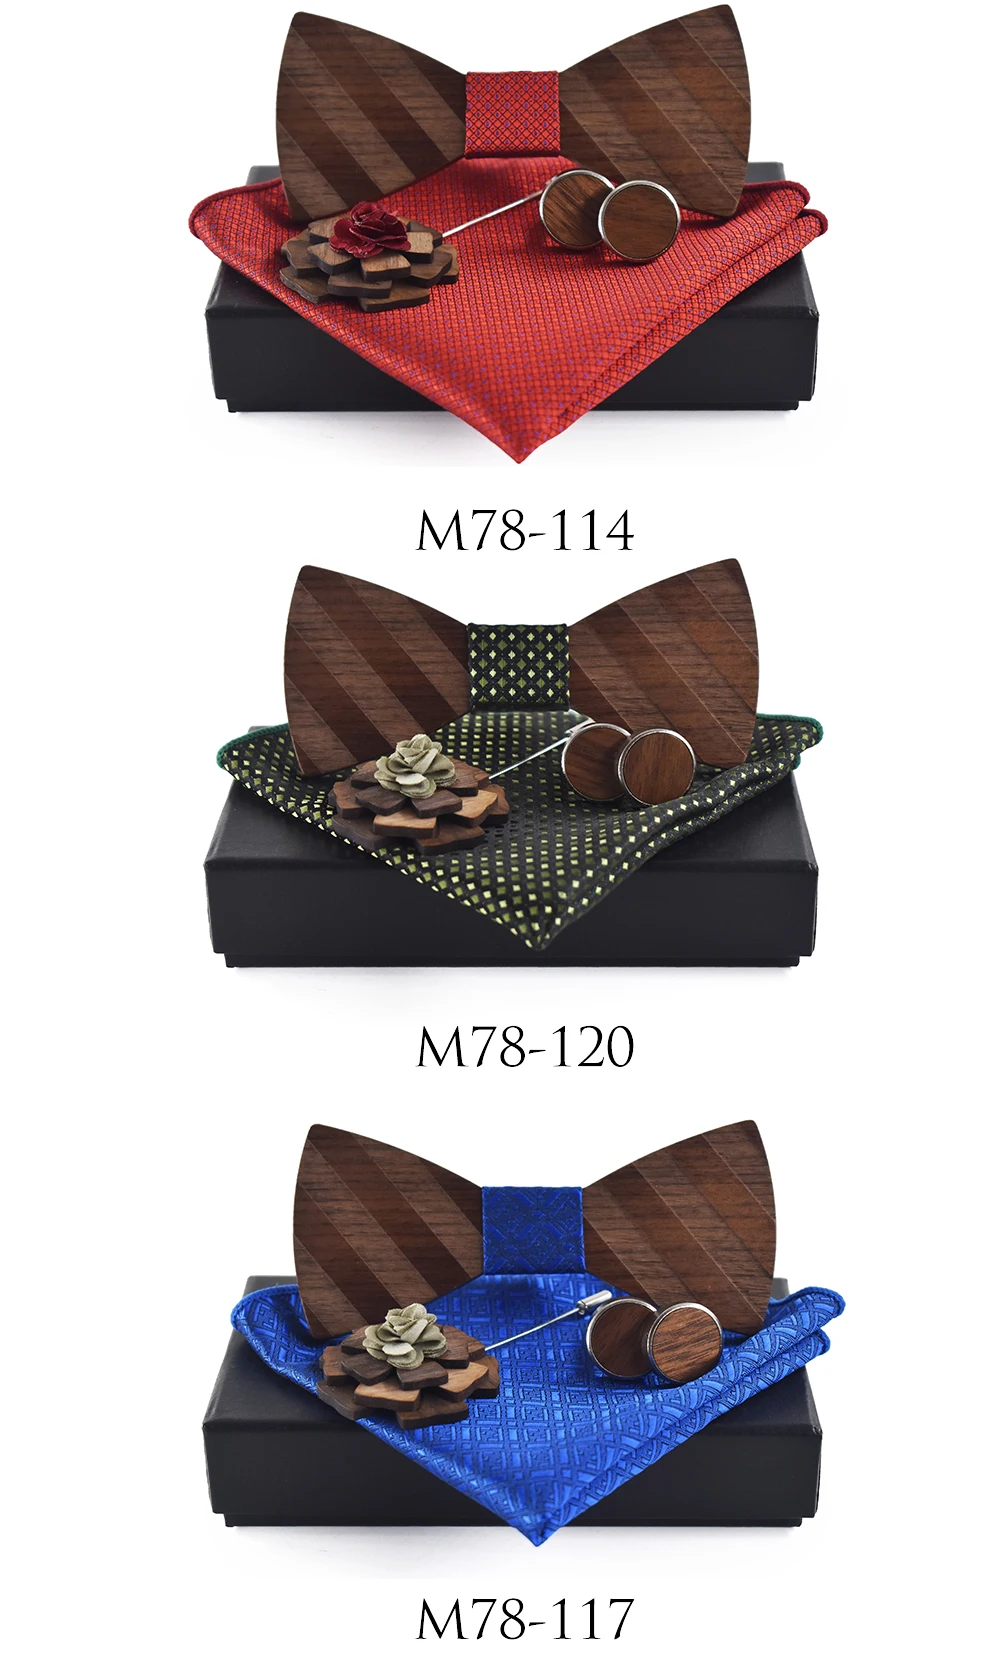 ZDJMEITRXDOOW платок Брошь Gravata галстук шуры запонки устанавливает полосатый деревянный галстук-бабочка Галстуки для Mens